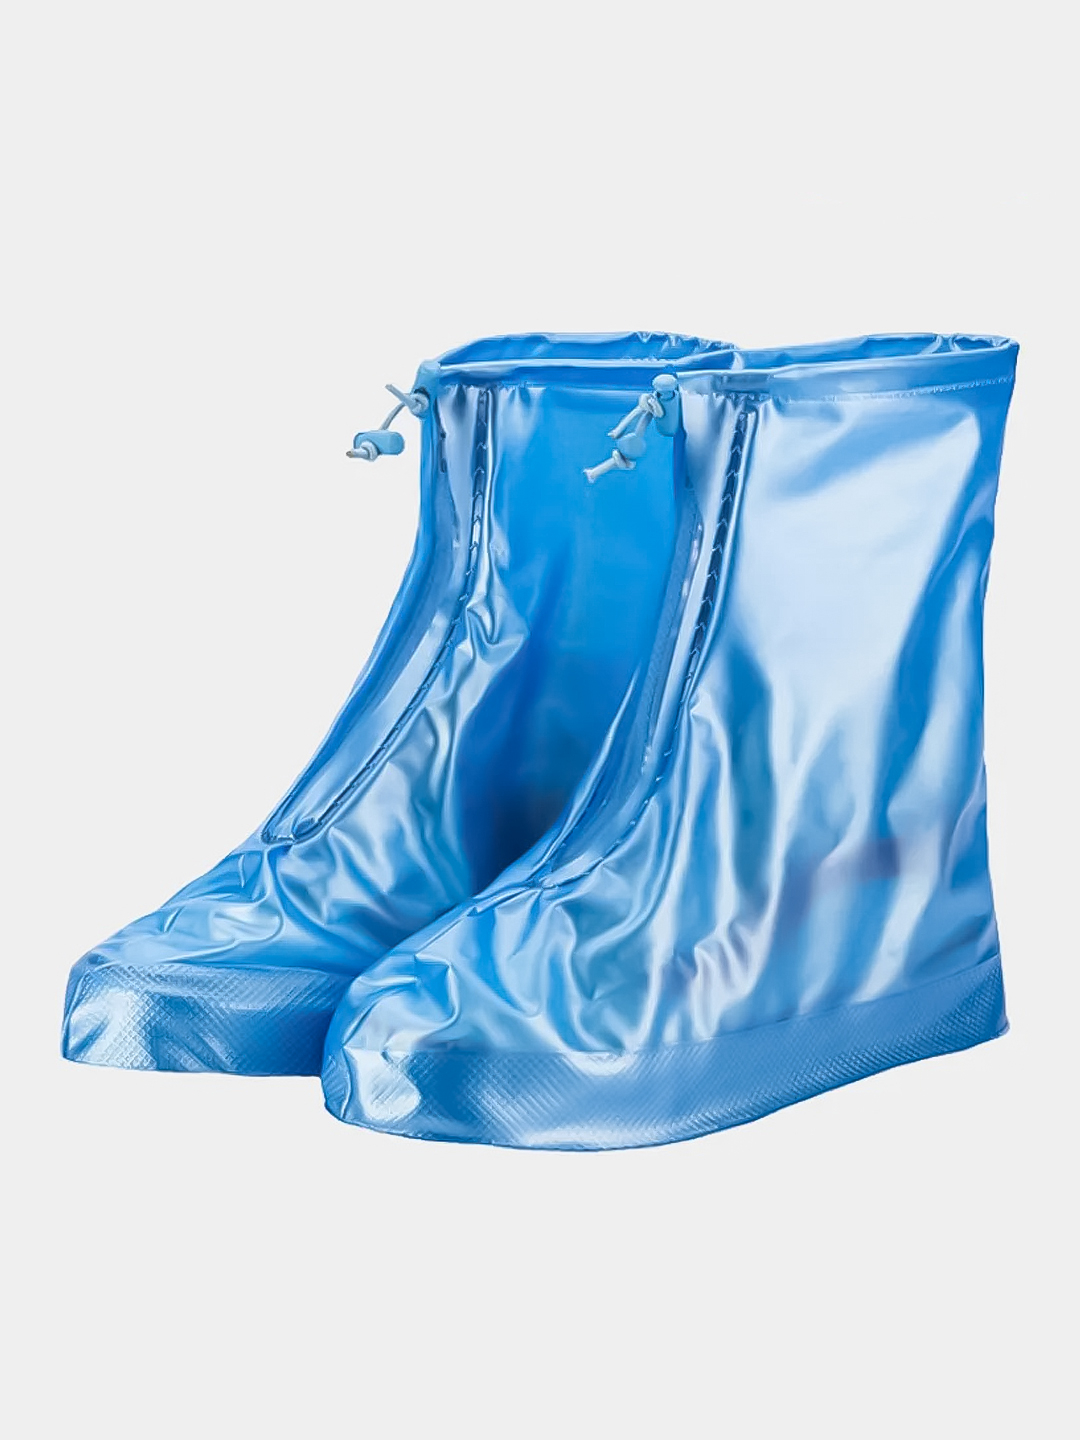 Чехлы для обуви купить. RZ-508 бахилы (дождевики). Бахилы непромокаемые. Непромокаемые бахилы для обуви. Бахилы от дождя для обуви.